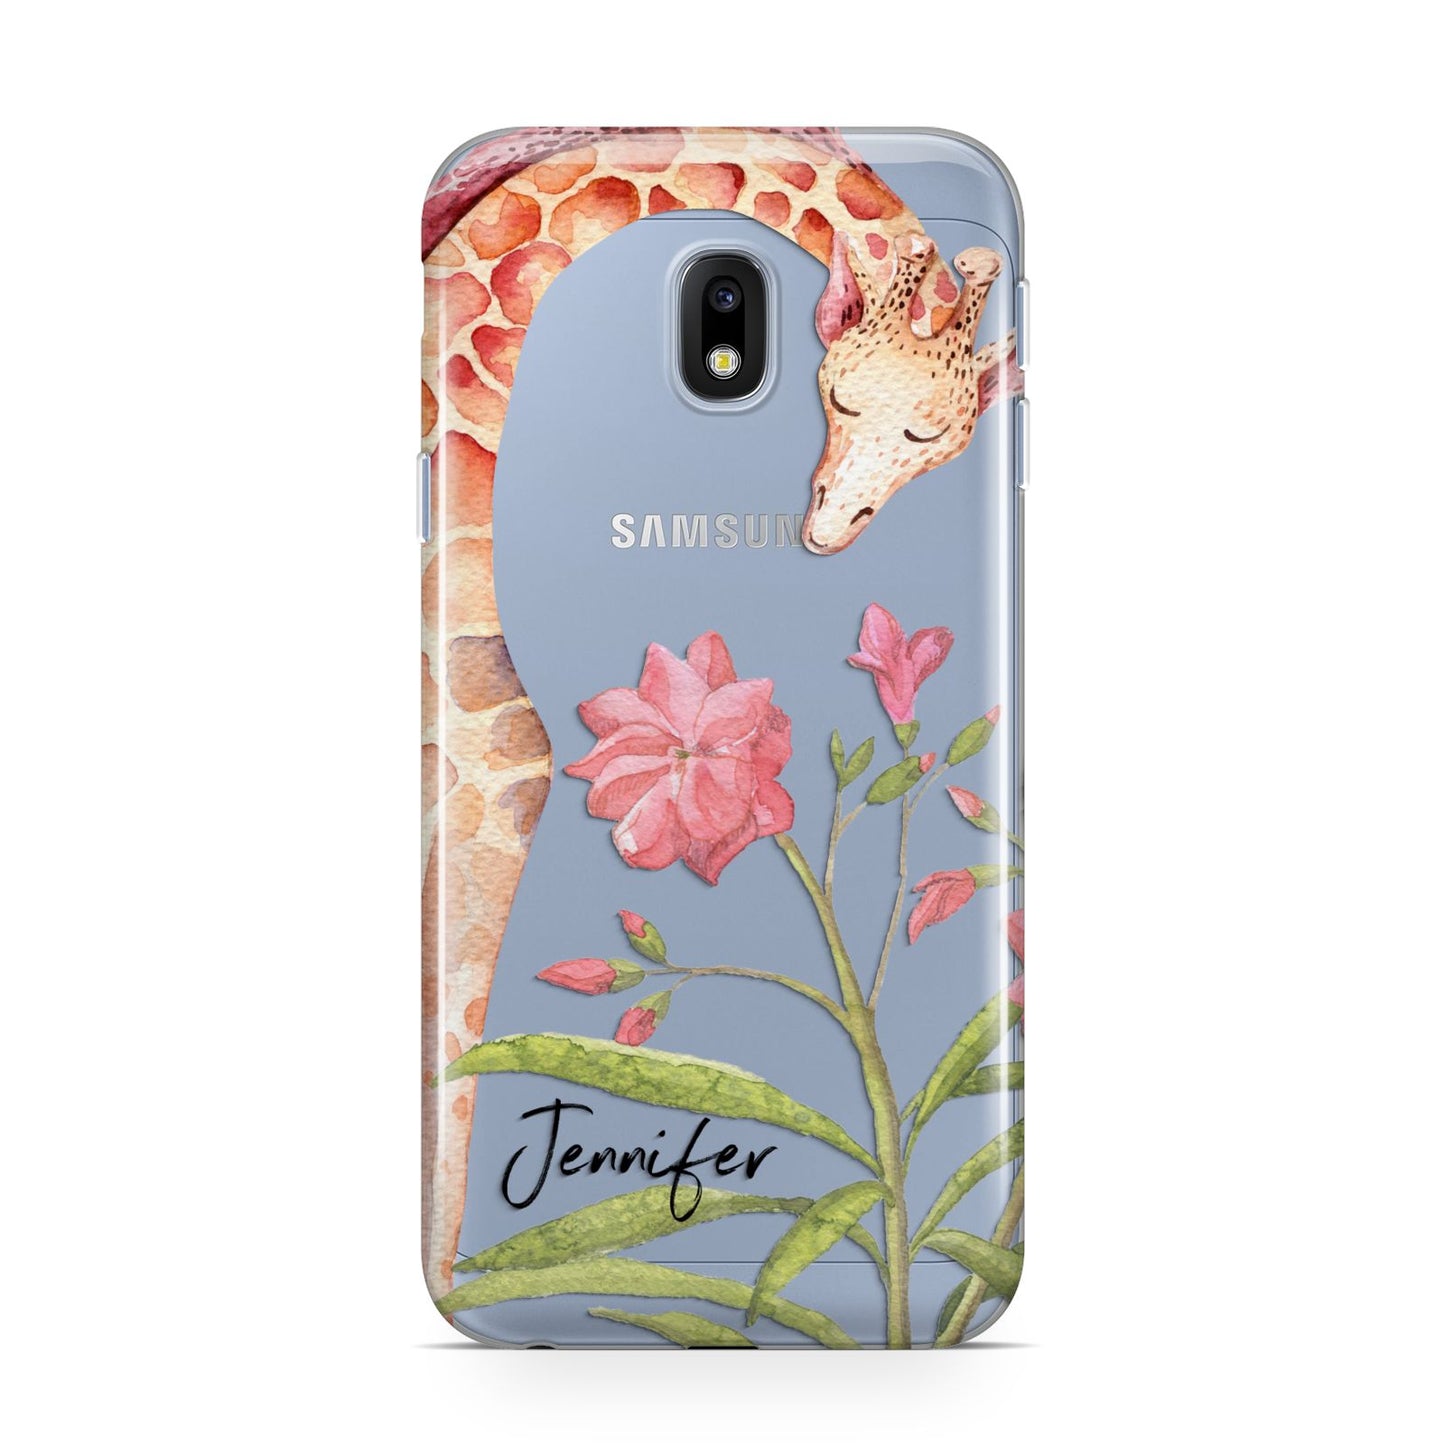 Personalised Giraffe Samsung Galaxy J3 2017 Case